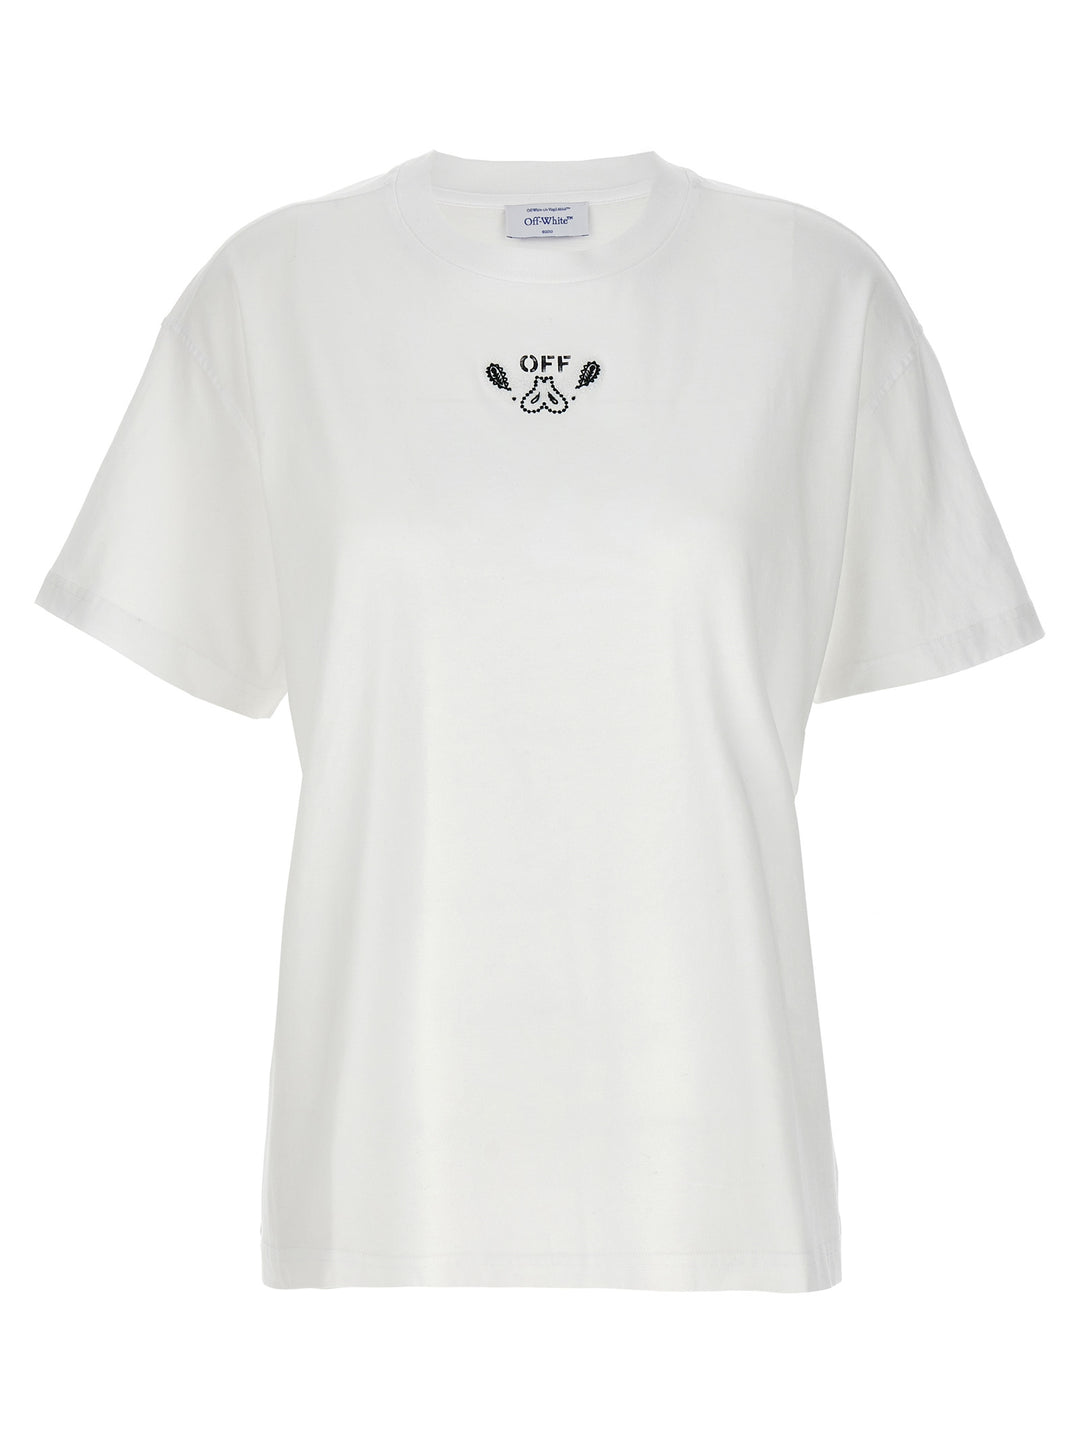 Embr Bandana Arrow T Shirt Bianco/Nero